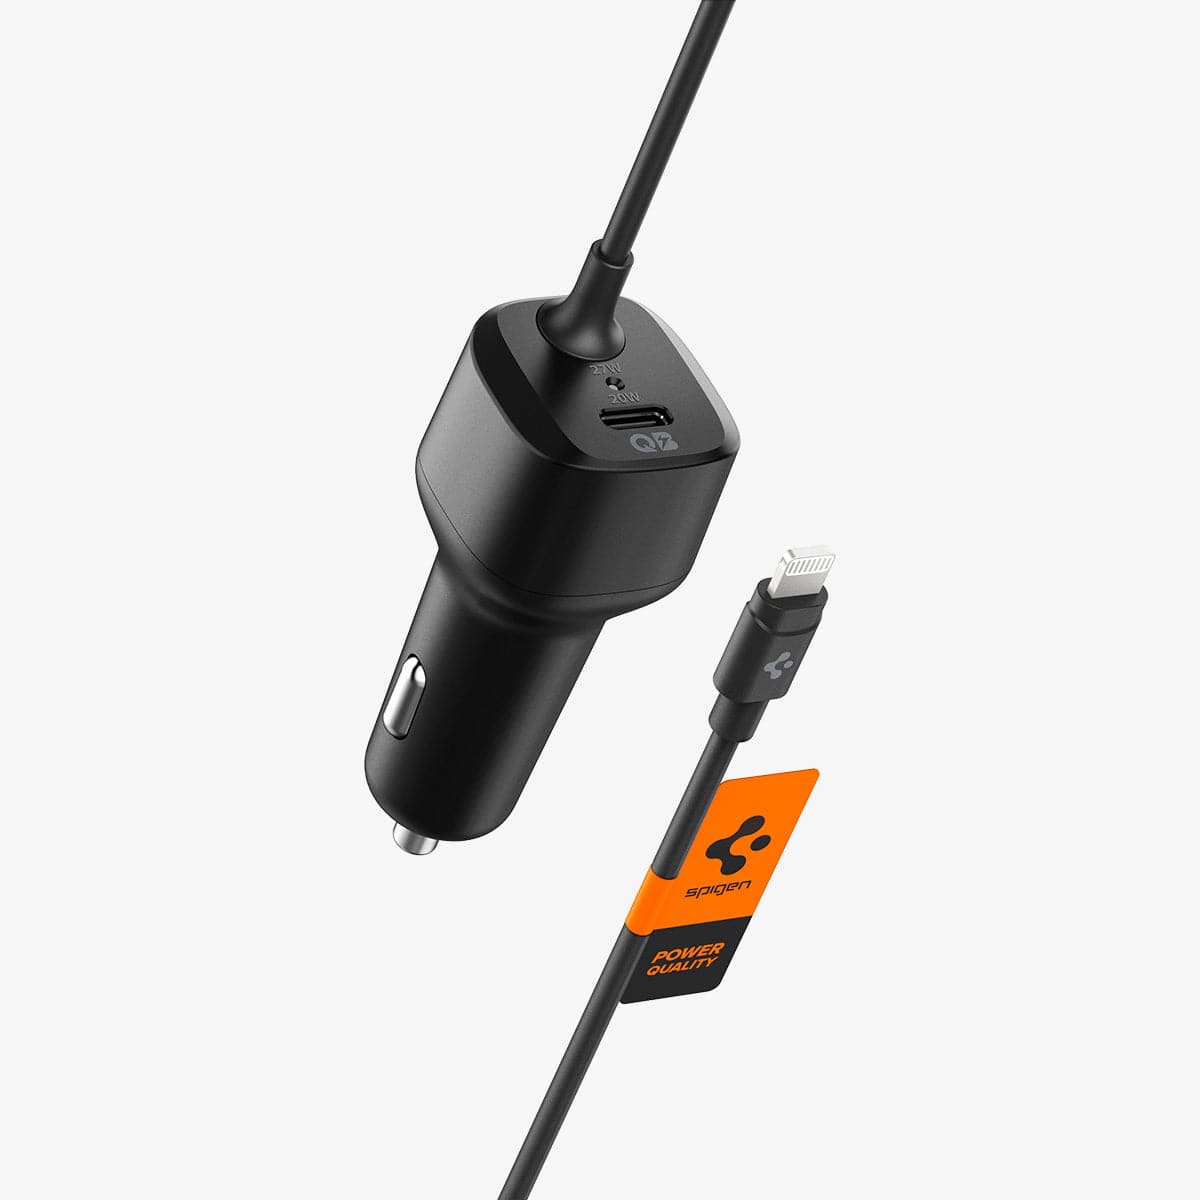 Spigen Essential USB C Car Charger, 45W Dual Port Car Charger Fast Charge  (PD 27W + Quick Charge 18W) Type C Adapter for iPhone 15 14 13 Pro Max Mini